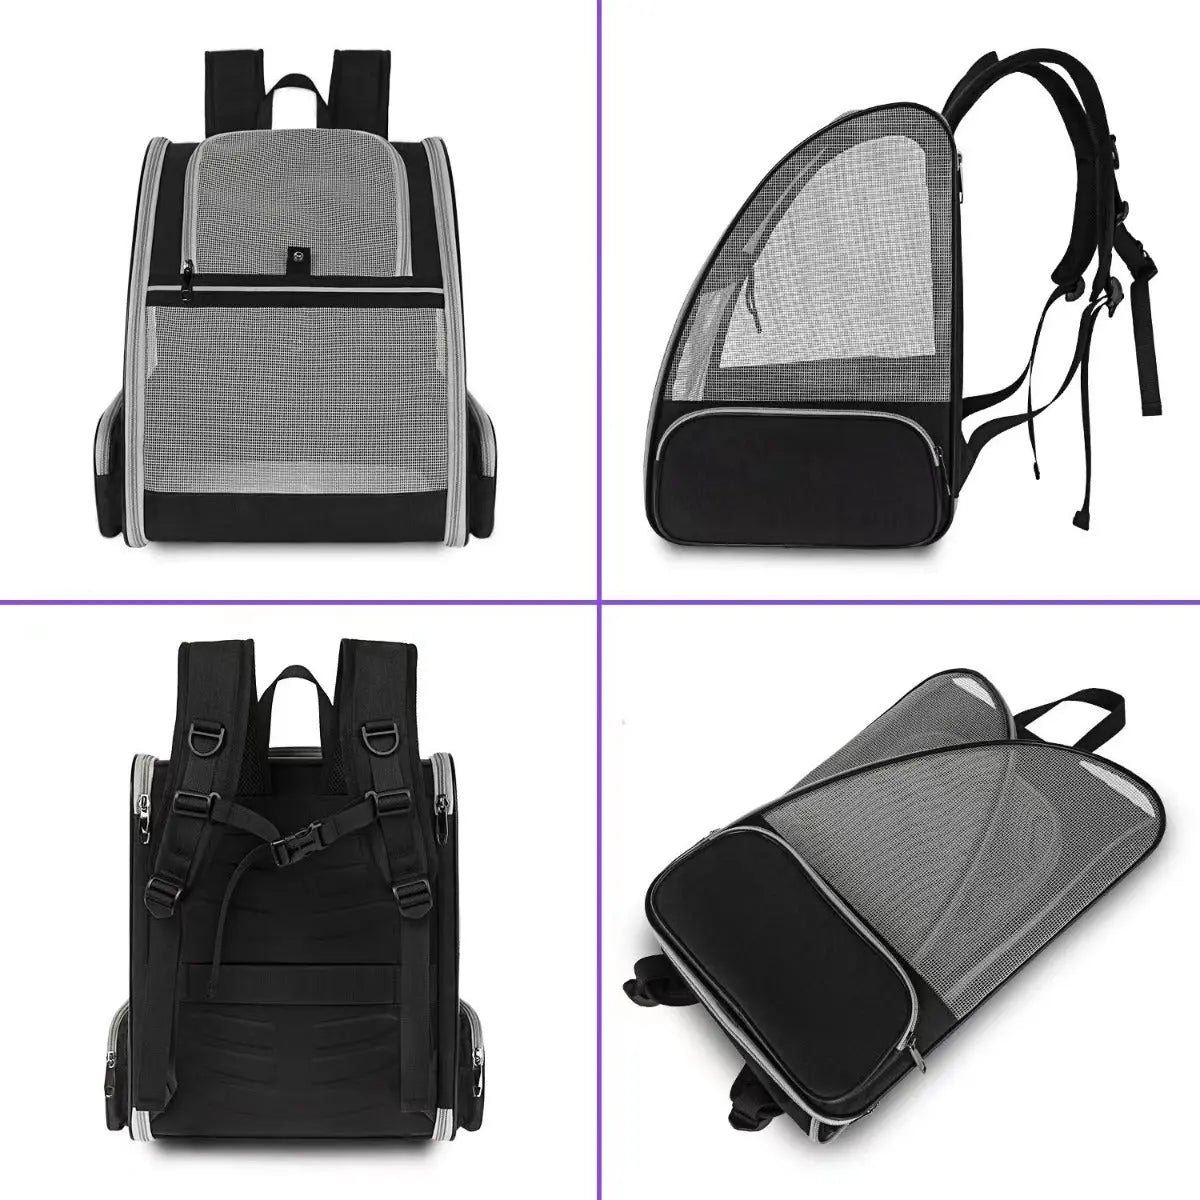 Cat backpack - dog backpack - transparent - for small pets - 32 x 28 x 40 cm - dog carrier bag - cat carrier bag